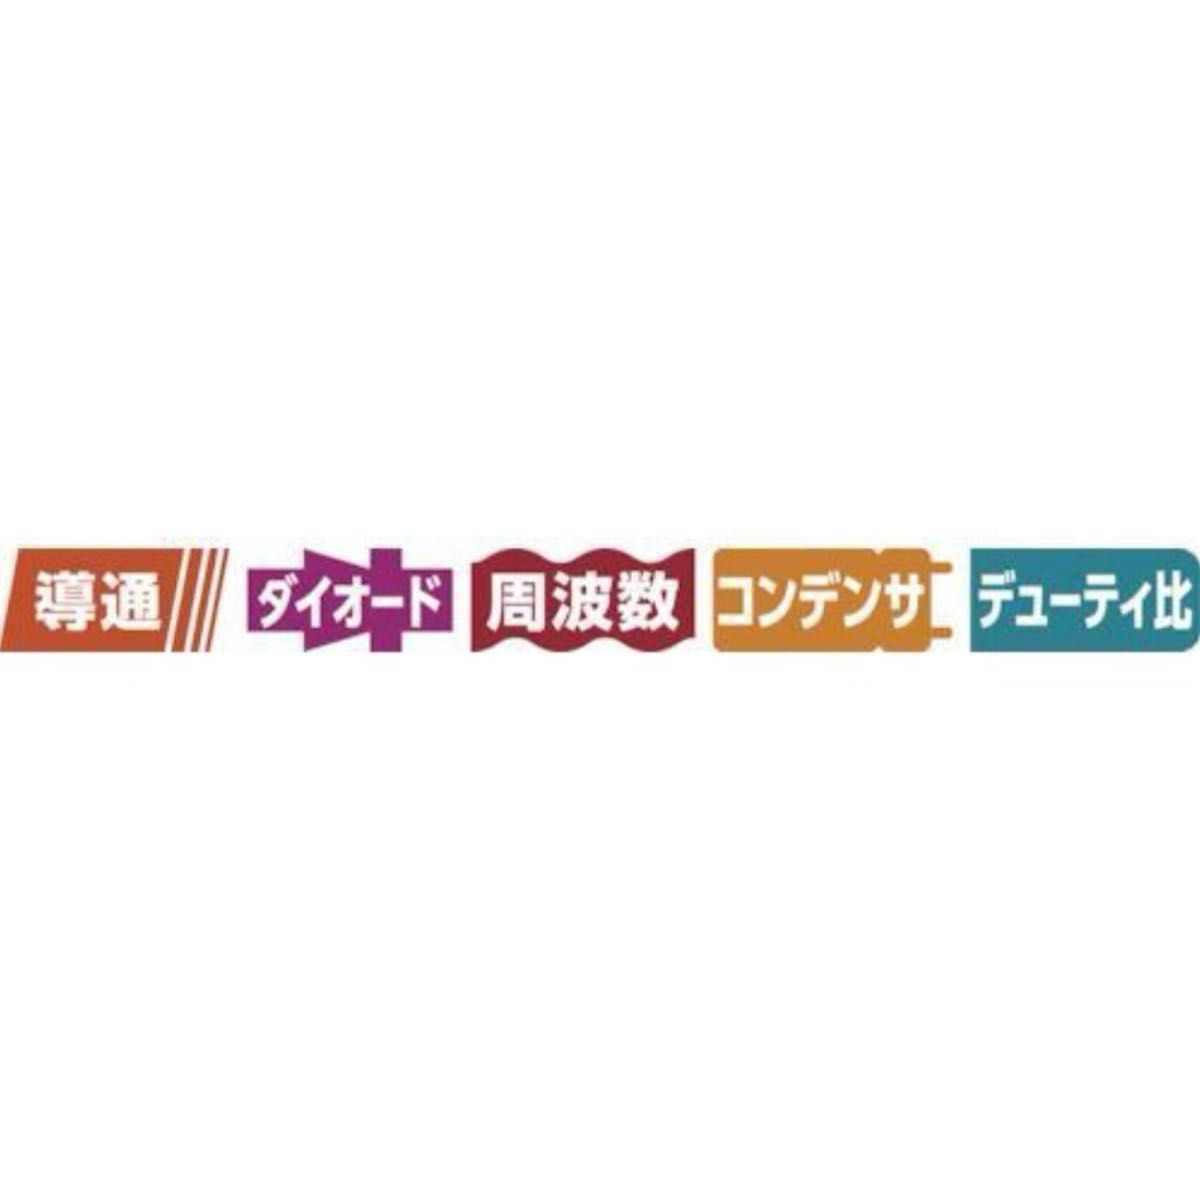 ■SANWA 【デジタルテスター】デジルマルチメータ 保護カバー付き